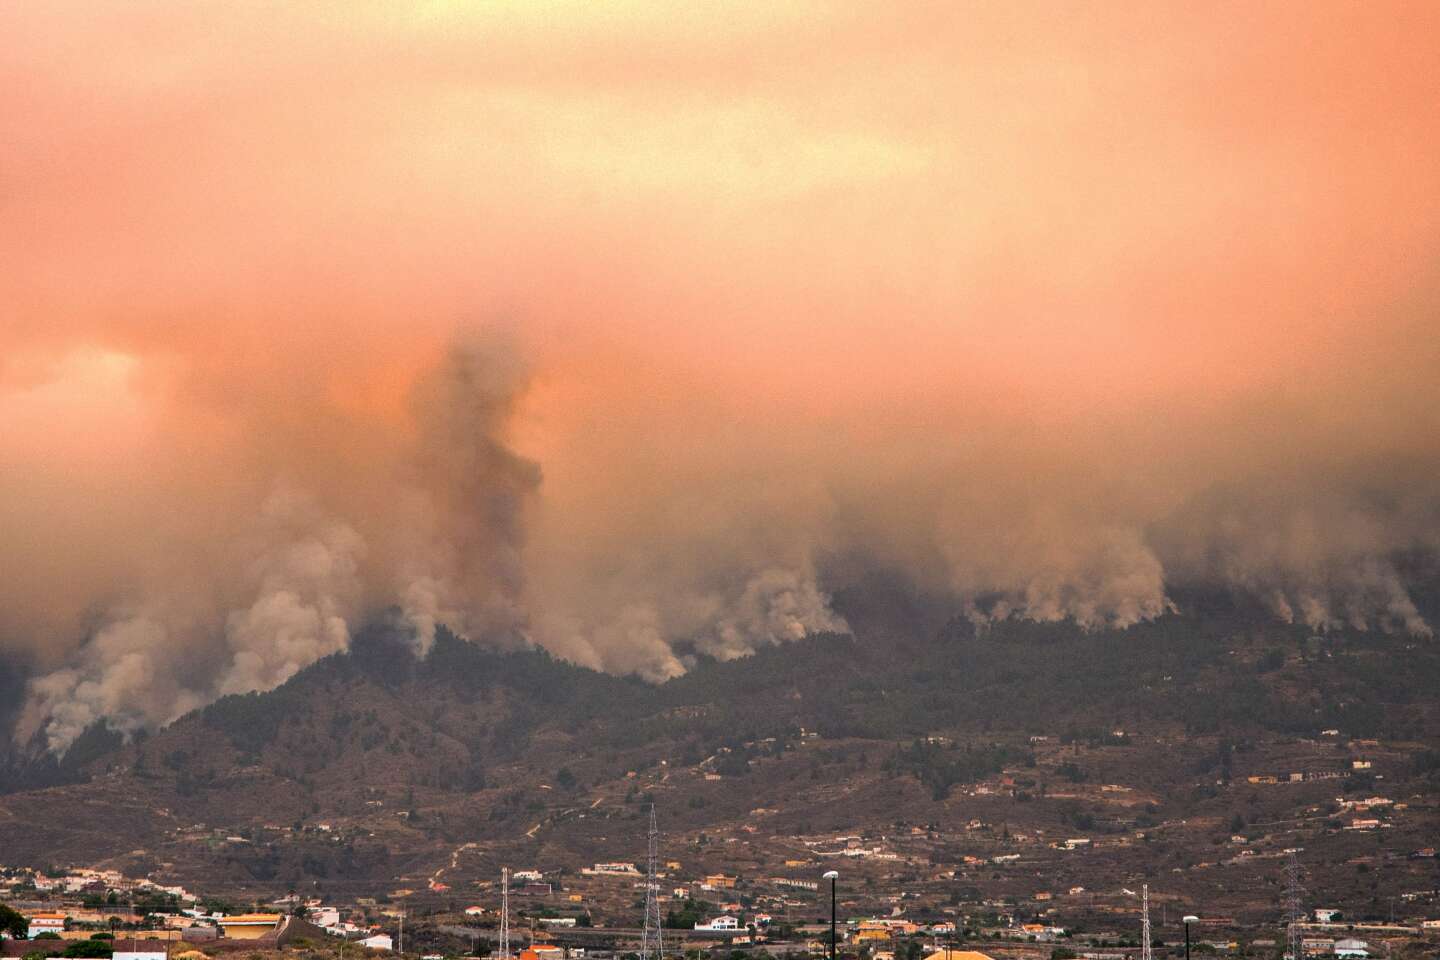 Tenerife has burned nearly 4,000 hectares